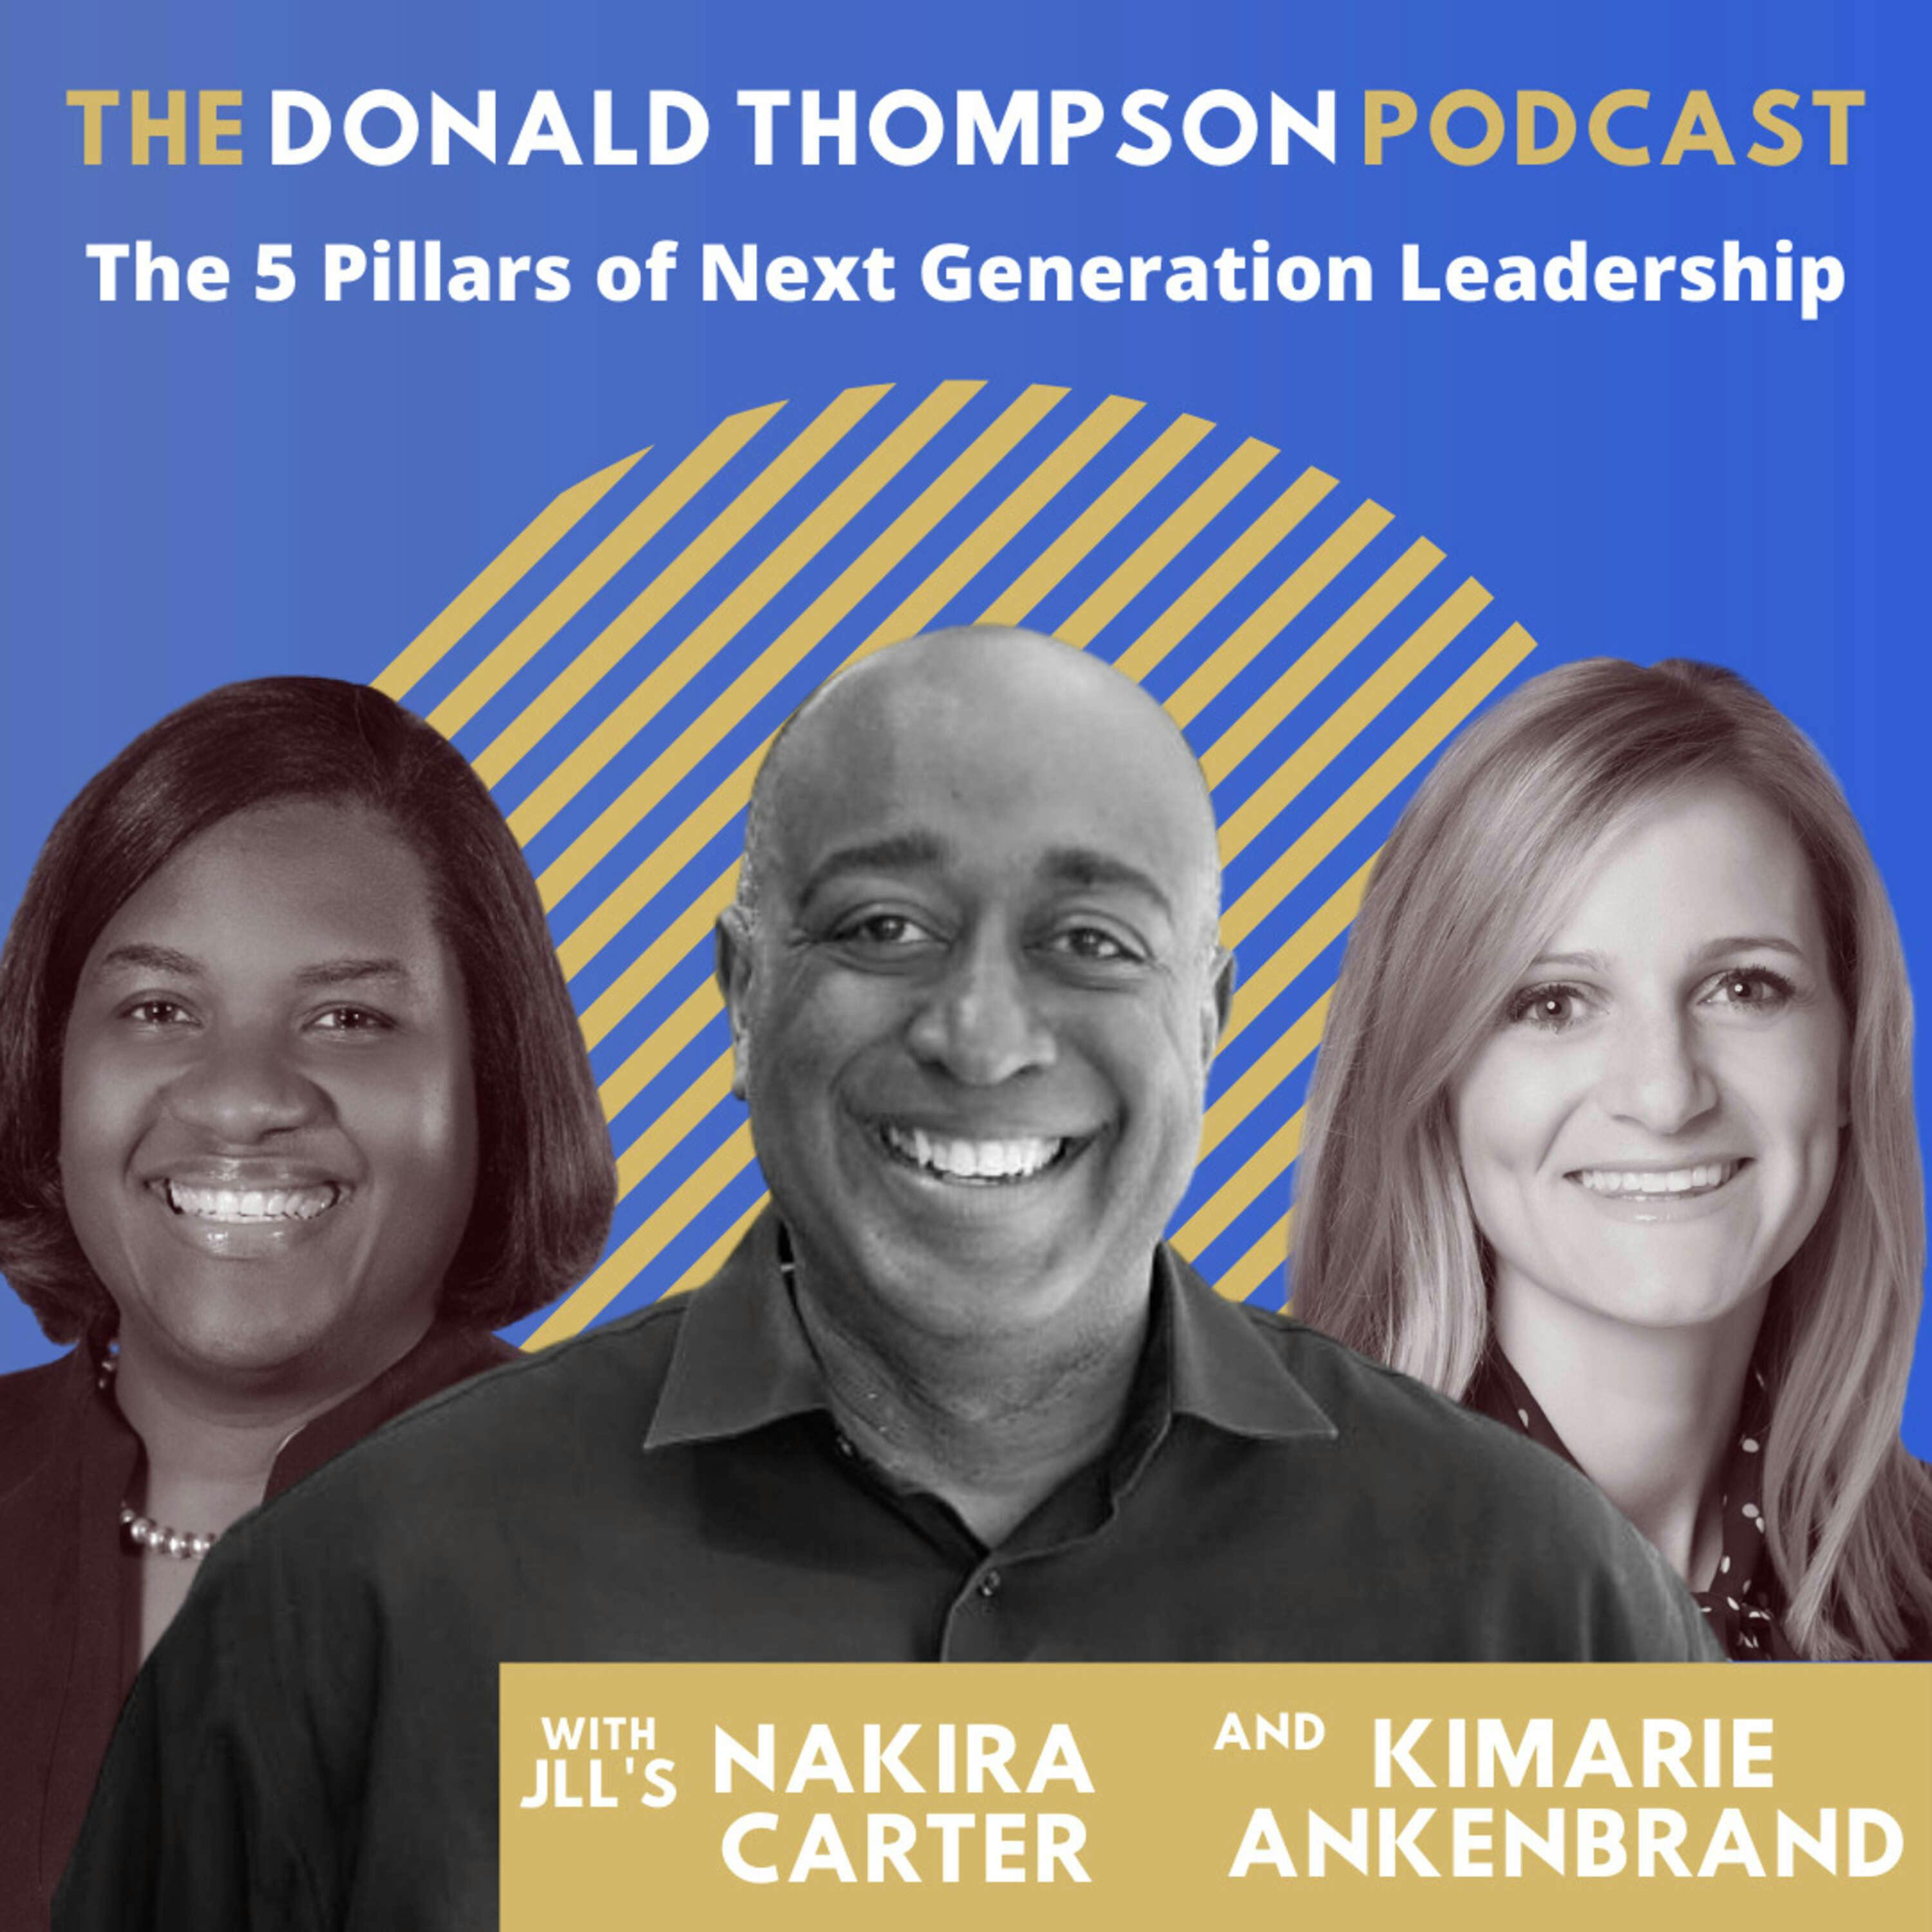 The 5 Pillars of Next Generation Leadership, with JLL’s Nakira Carter and Kimarie Ankenbrand